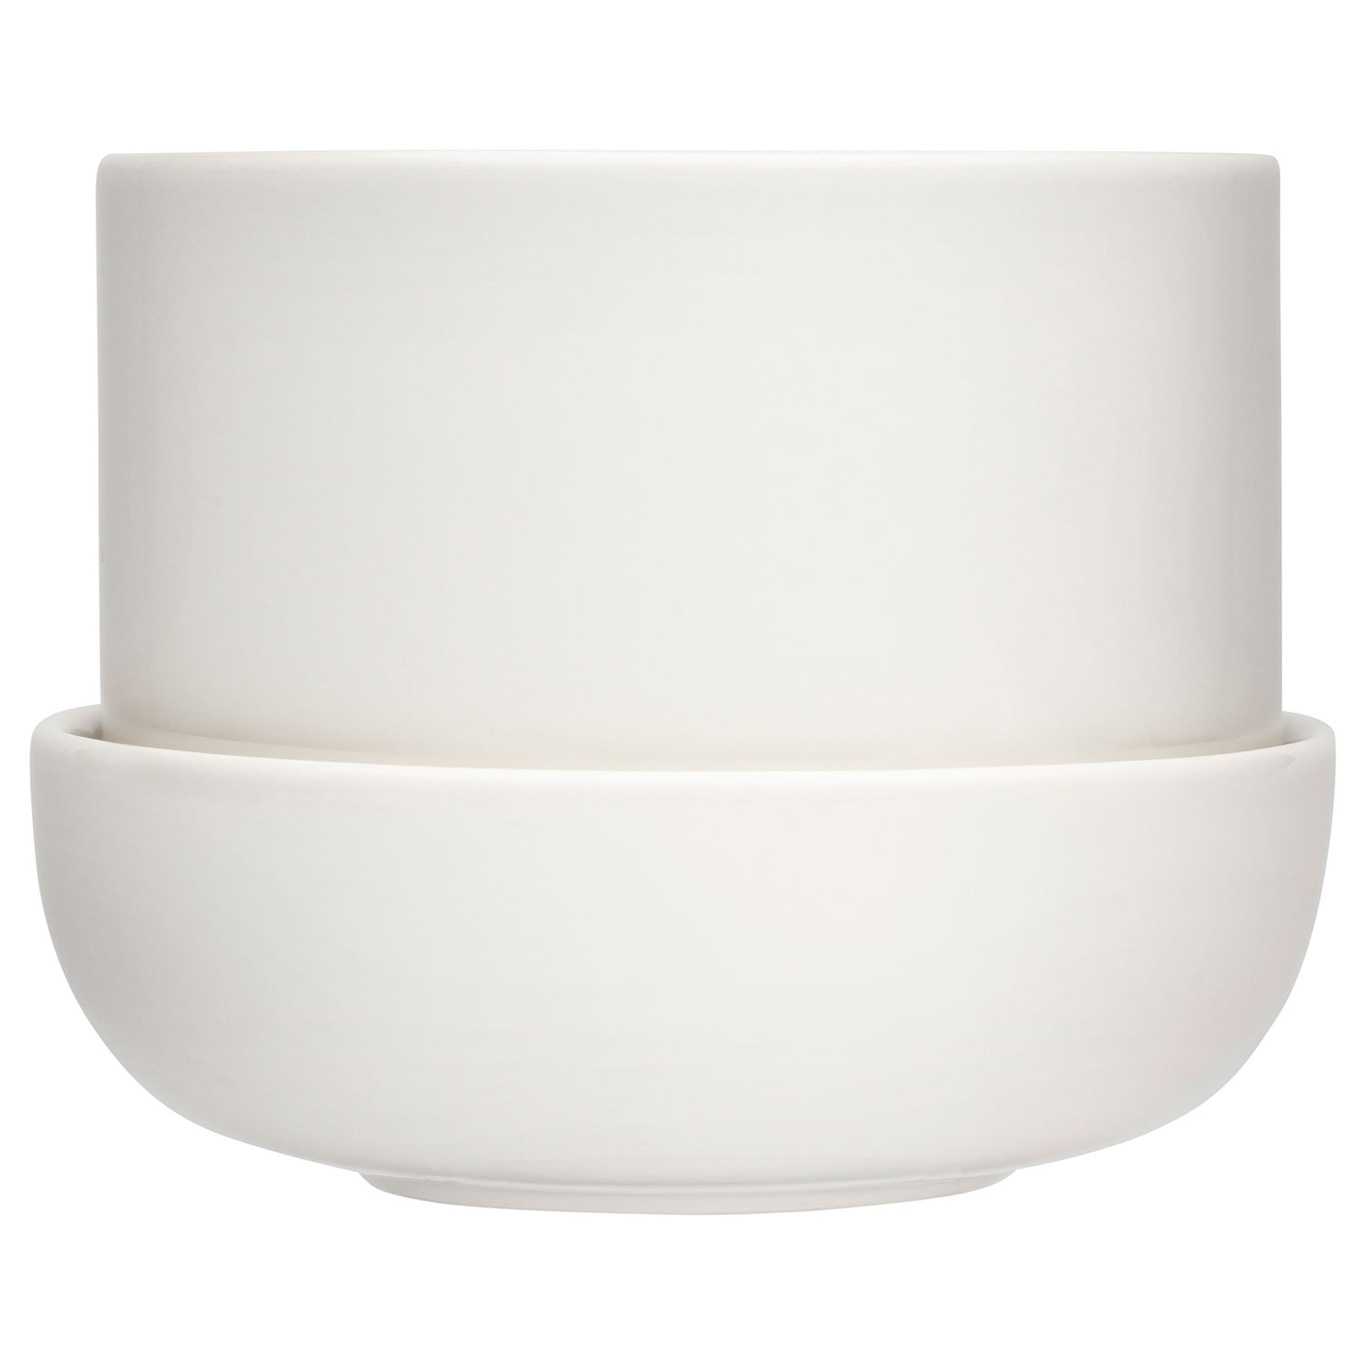 Nappula Pot With Saucer 17x13 cm, White